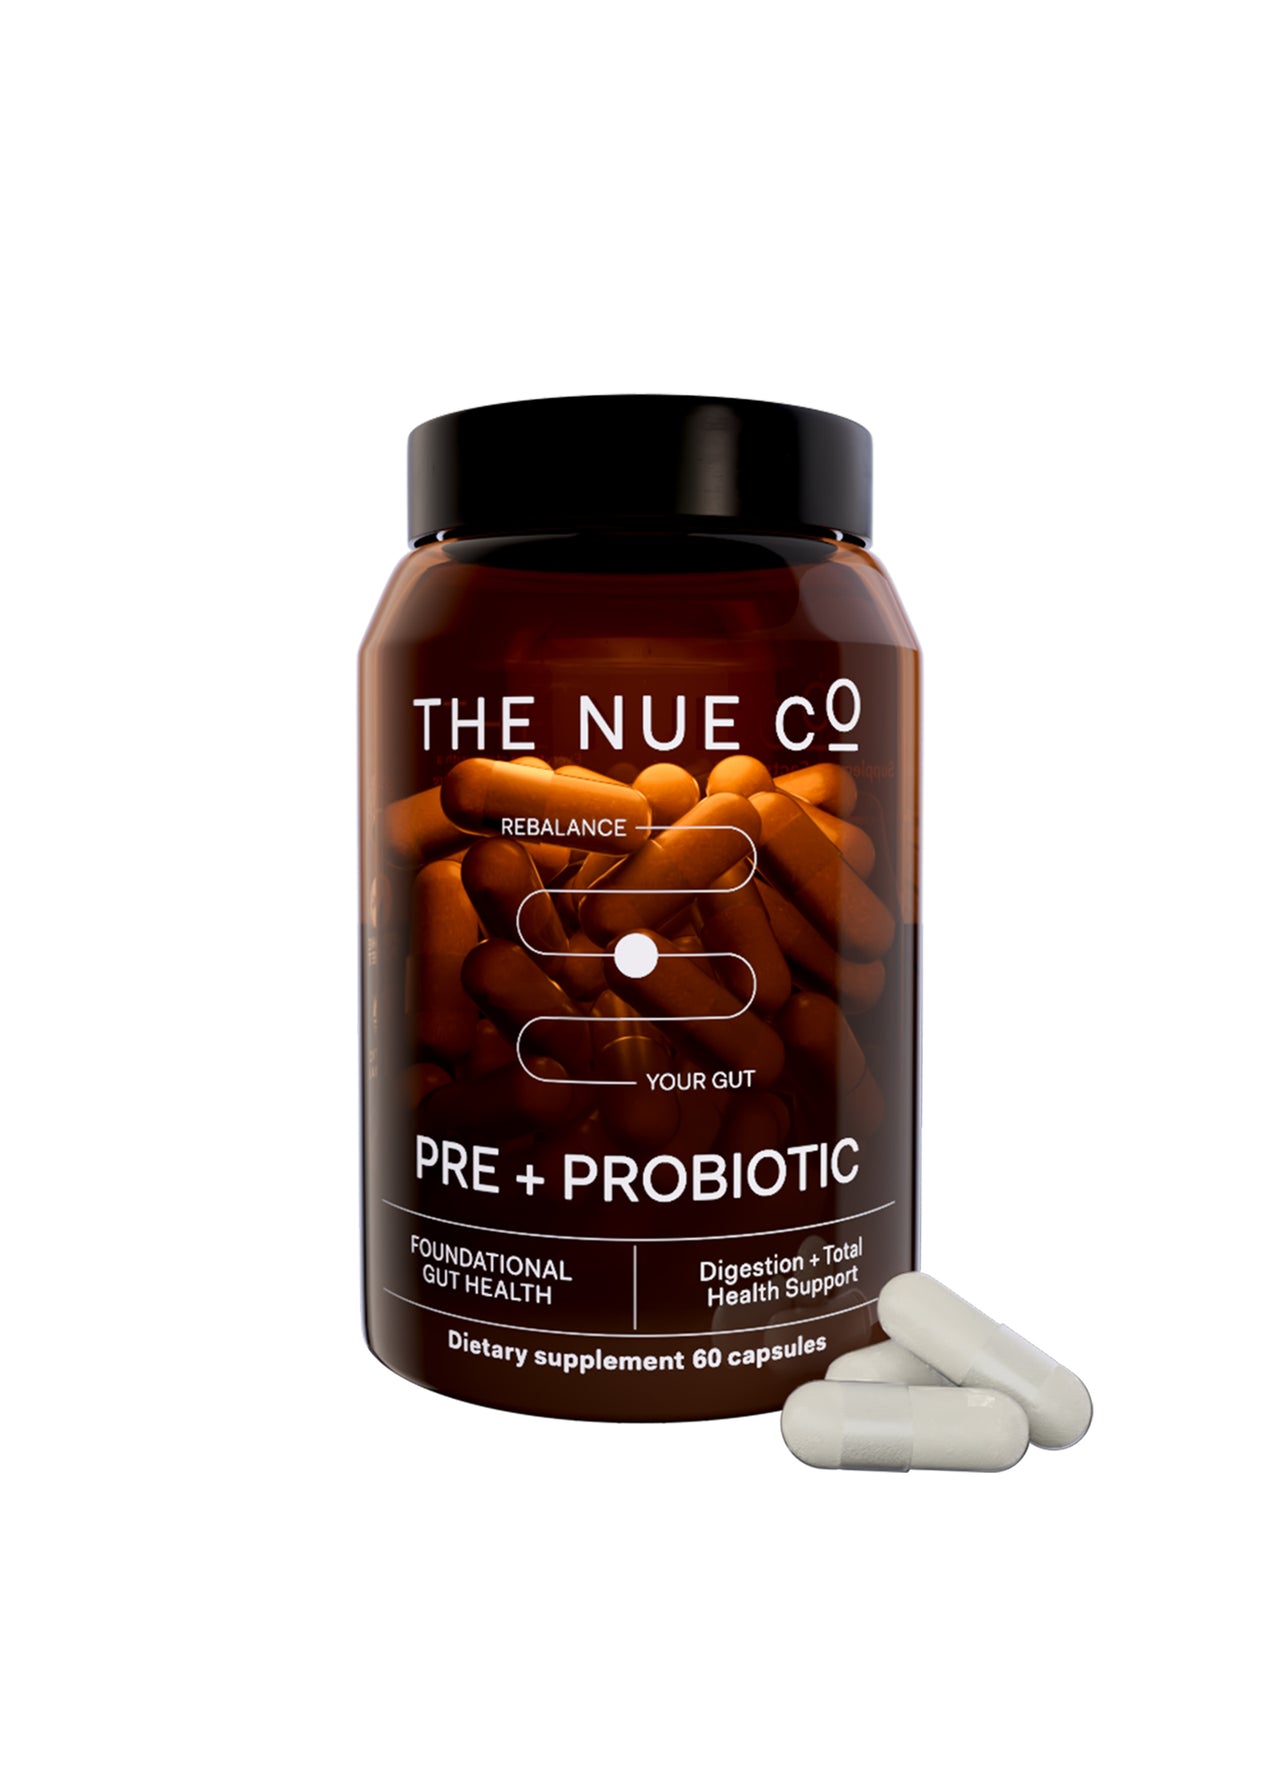 THE NUE CO Prebiotic + Probiotic Supplement